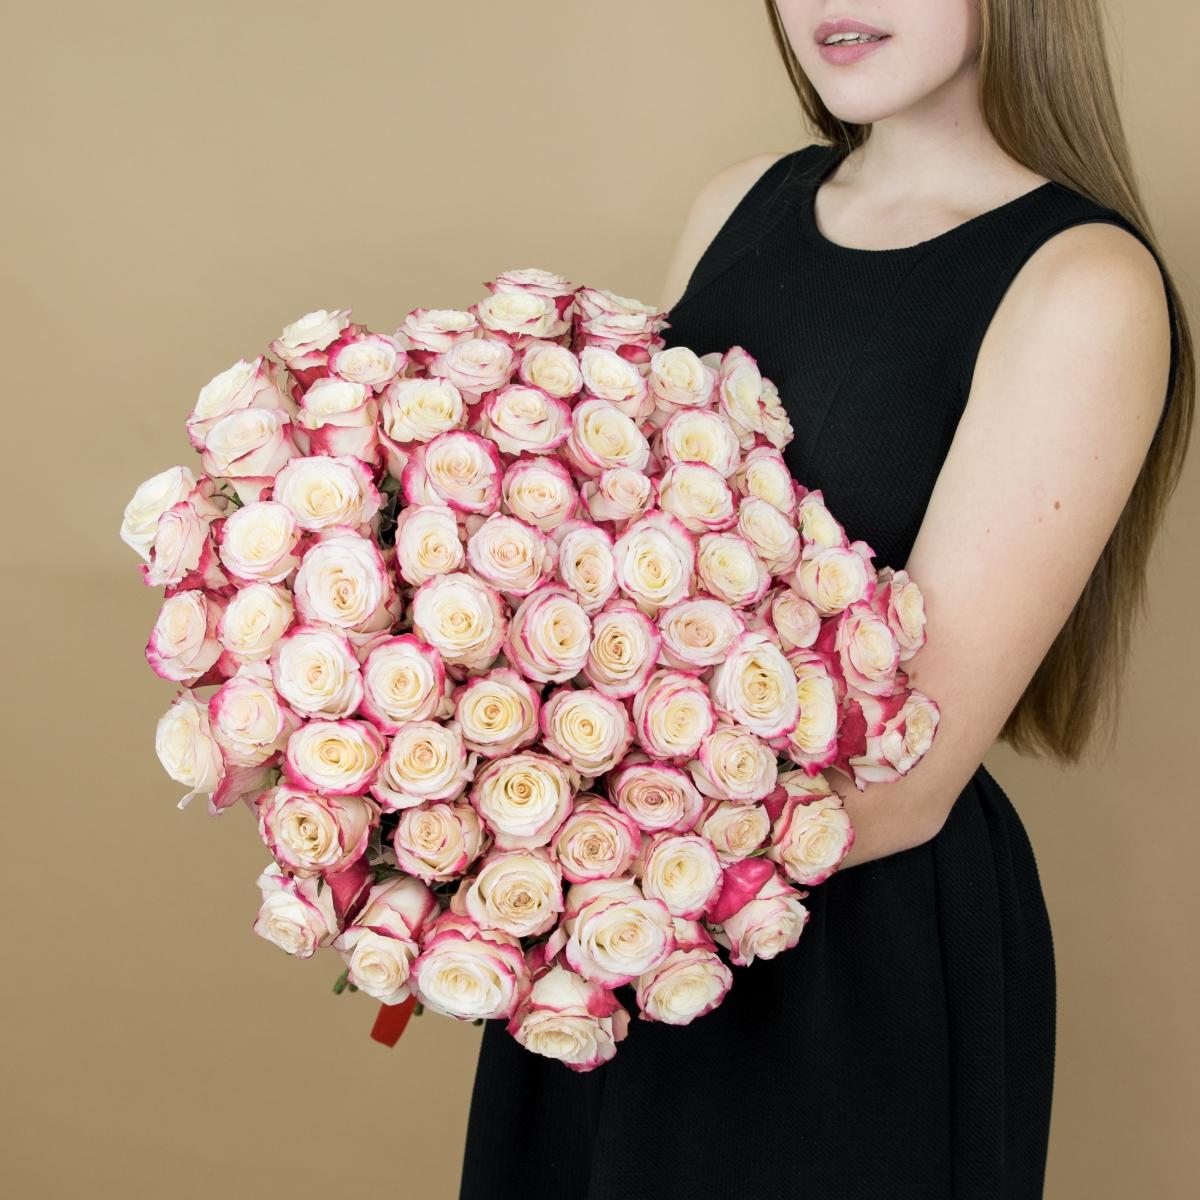 Розы красно-белые 101 шт. (40 см) Артикул: 86508